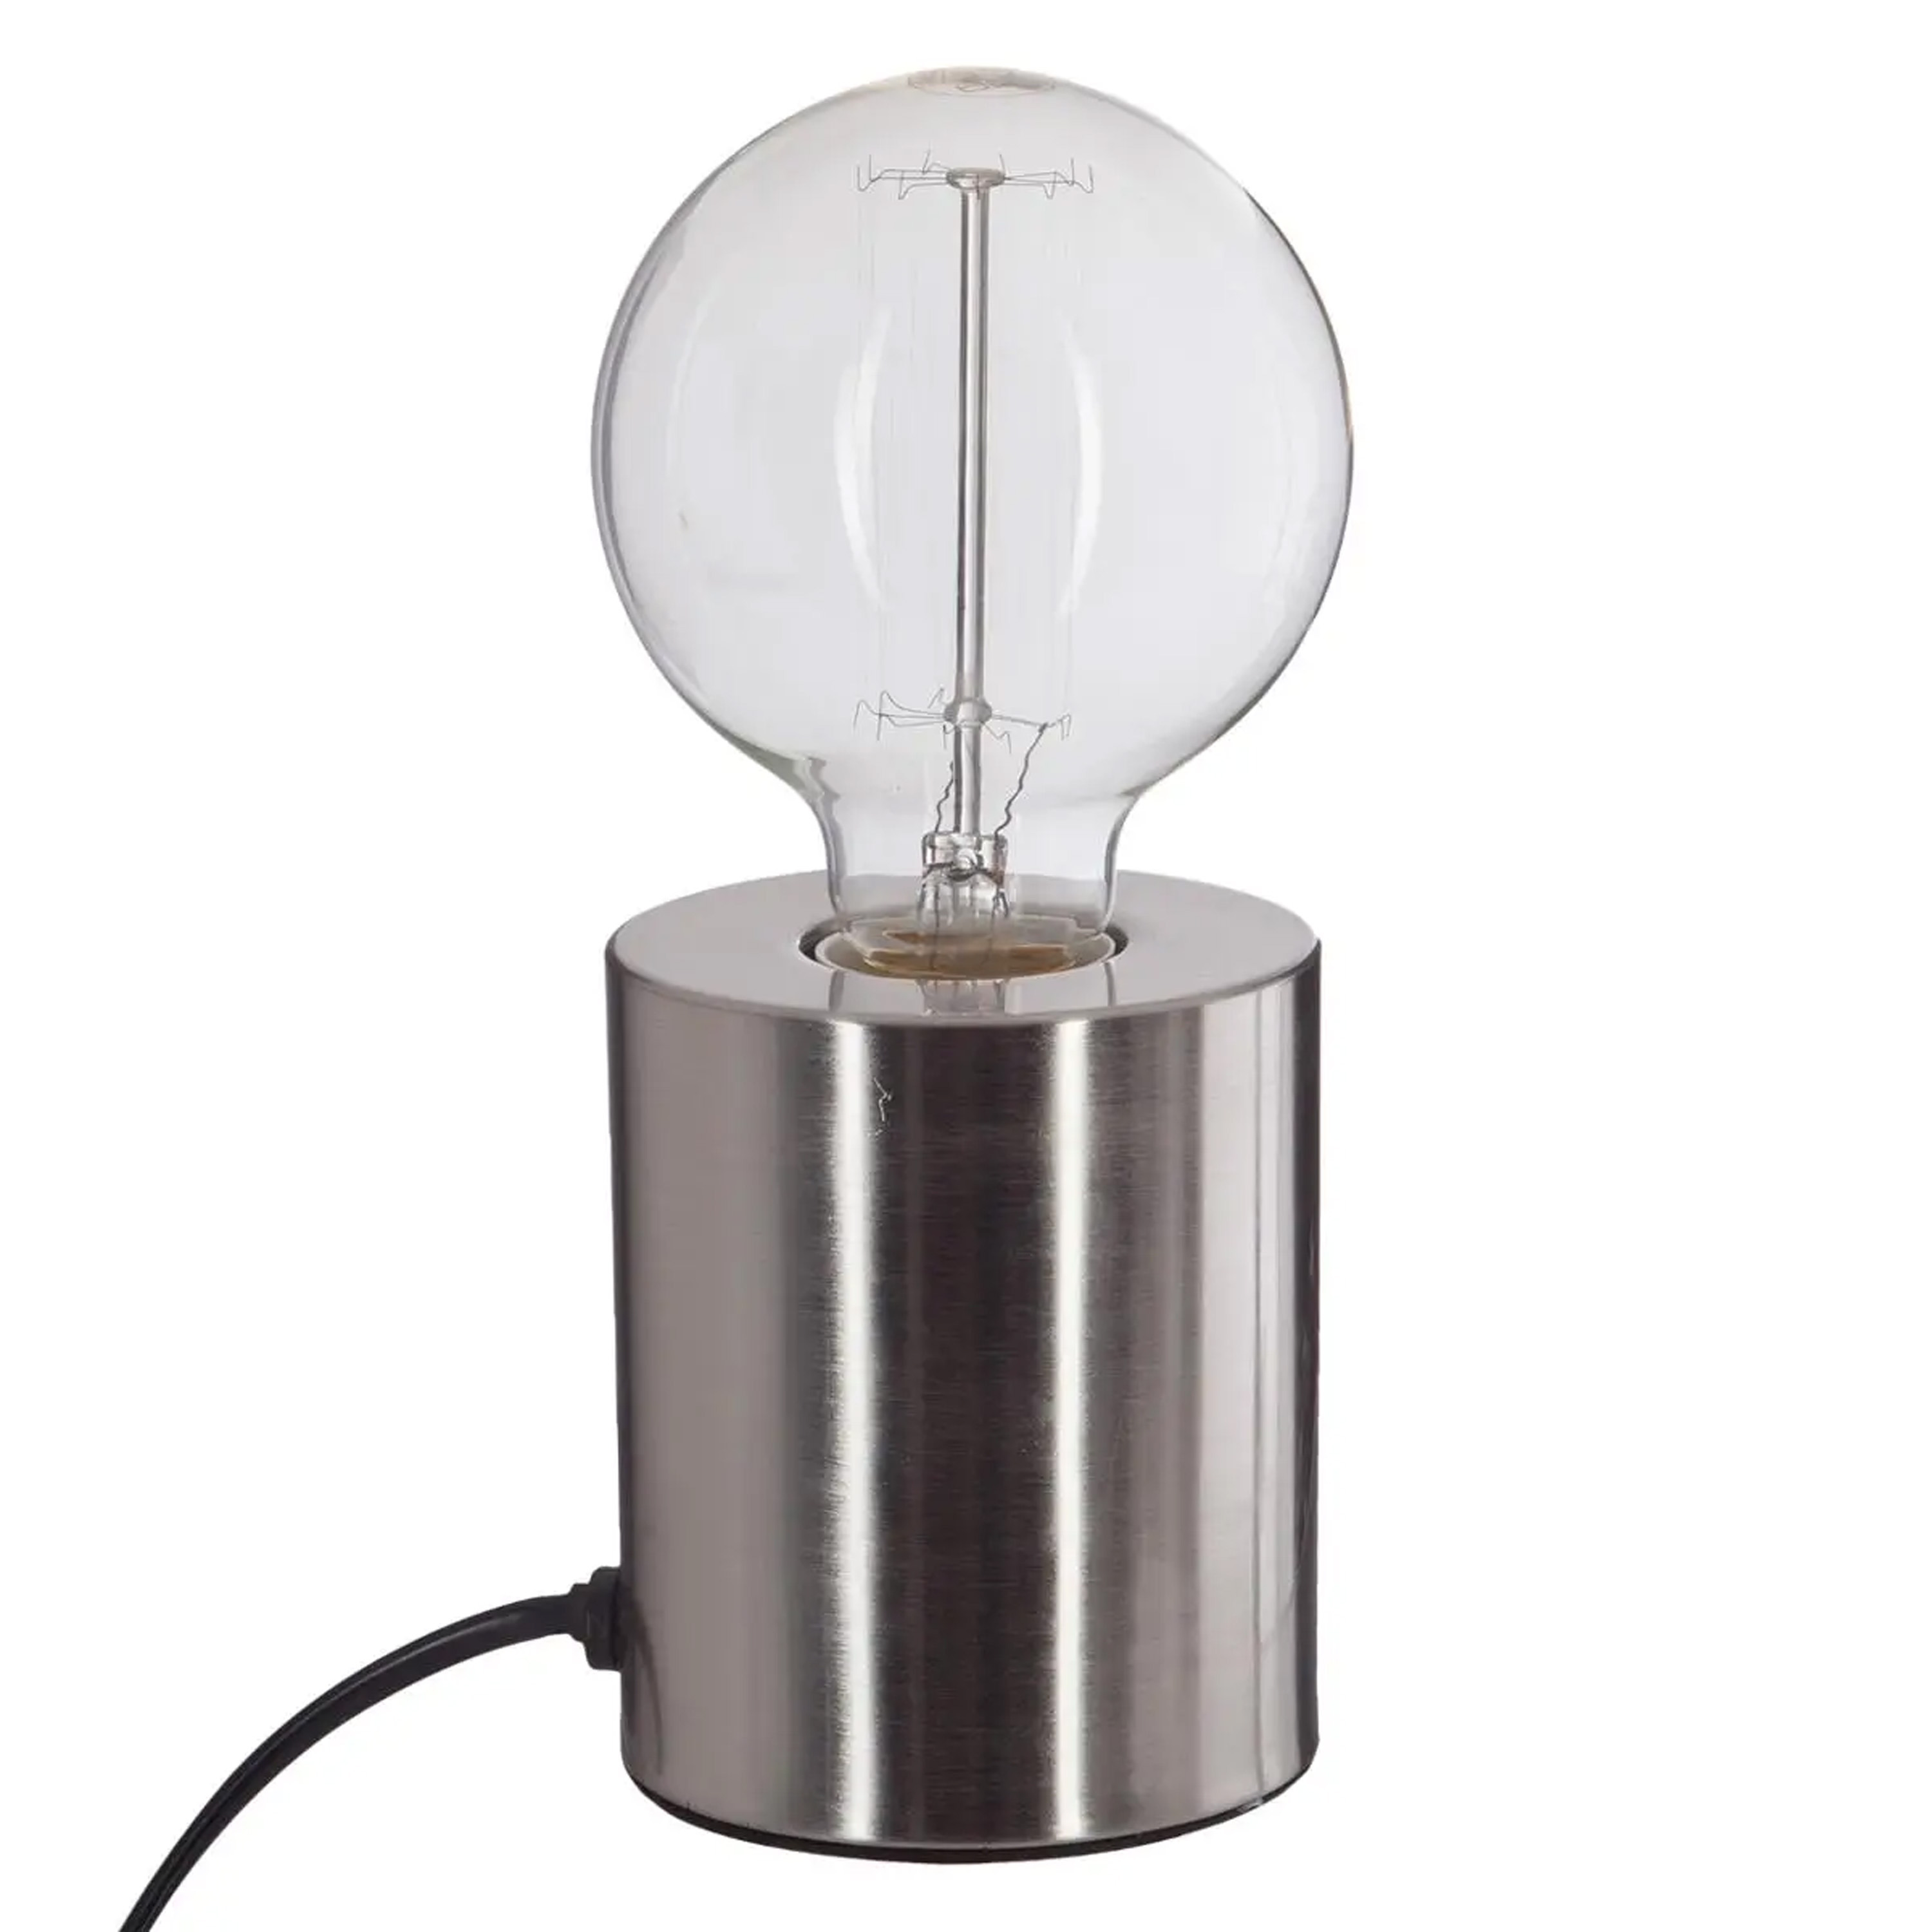 Atmosphera Tafellamp Saba metaal zilver H10 cm Leeslampje Designlamp